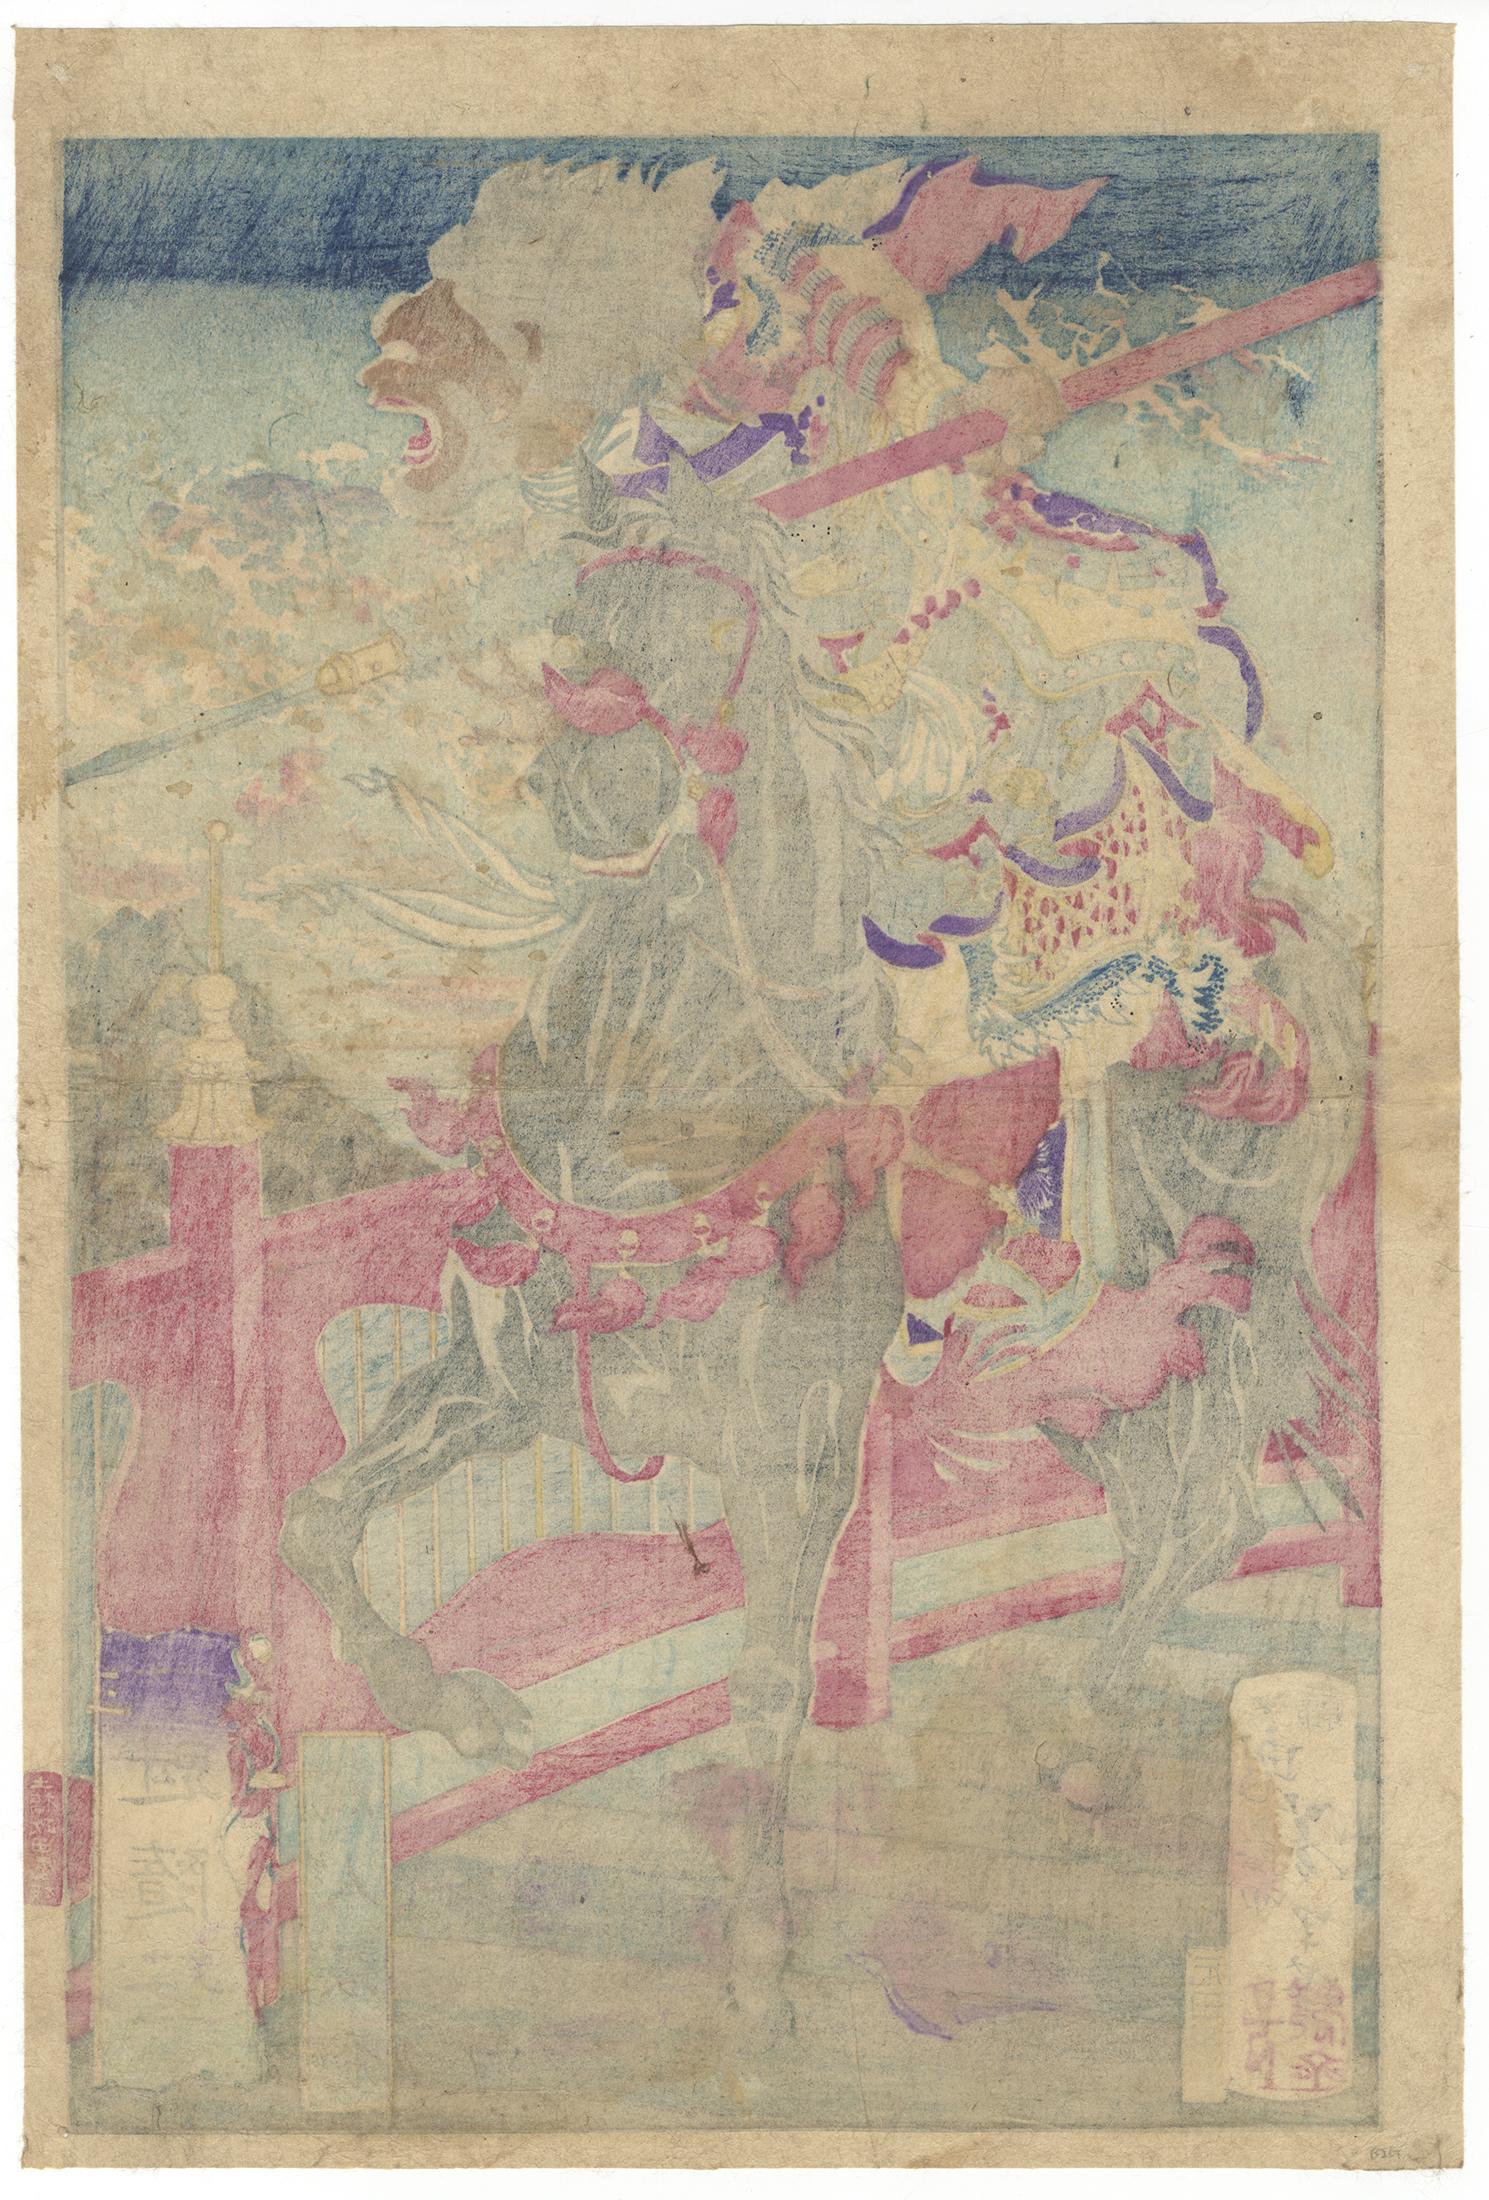 Artist: Yoshitoshi Tsukioka (1839-1892)
Title: Zhang Fei at Changban Bridge
Series: Essays by Yoshitoshi 
Publisher: Dobashi Masadaya
Date: 1872
Dimensions: 24.8 x 36.8 cm 

The battle is that of Changban. Fought in China 208 AD, the conflict